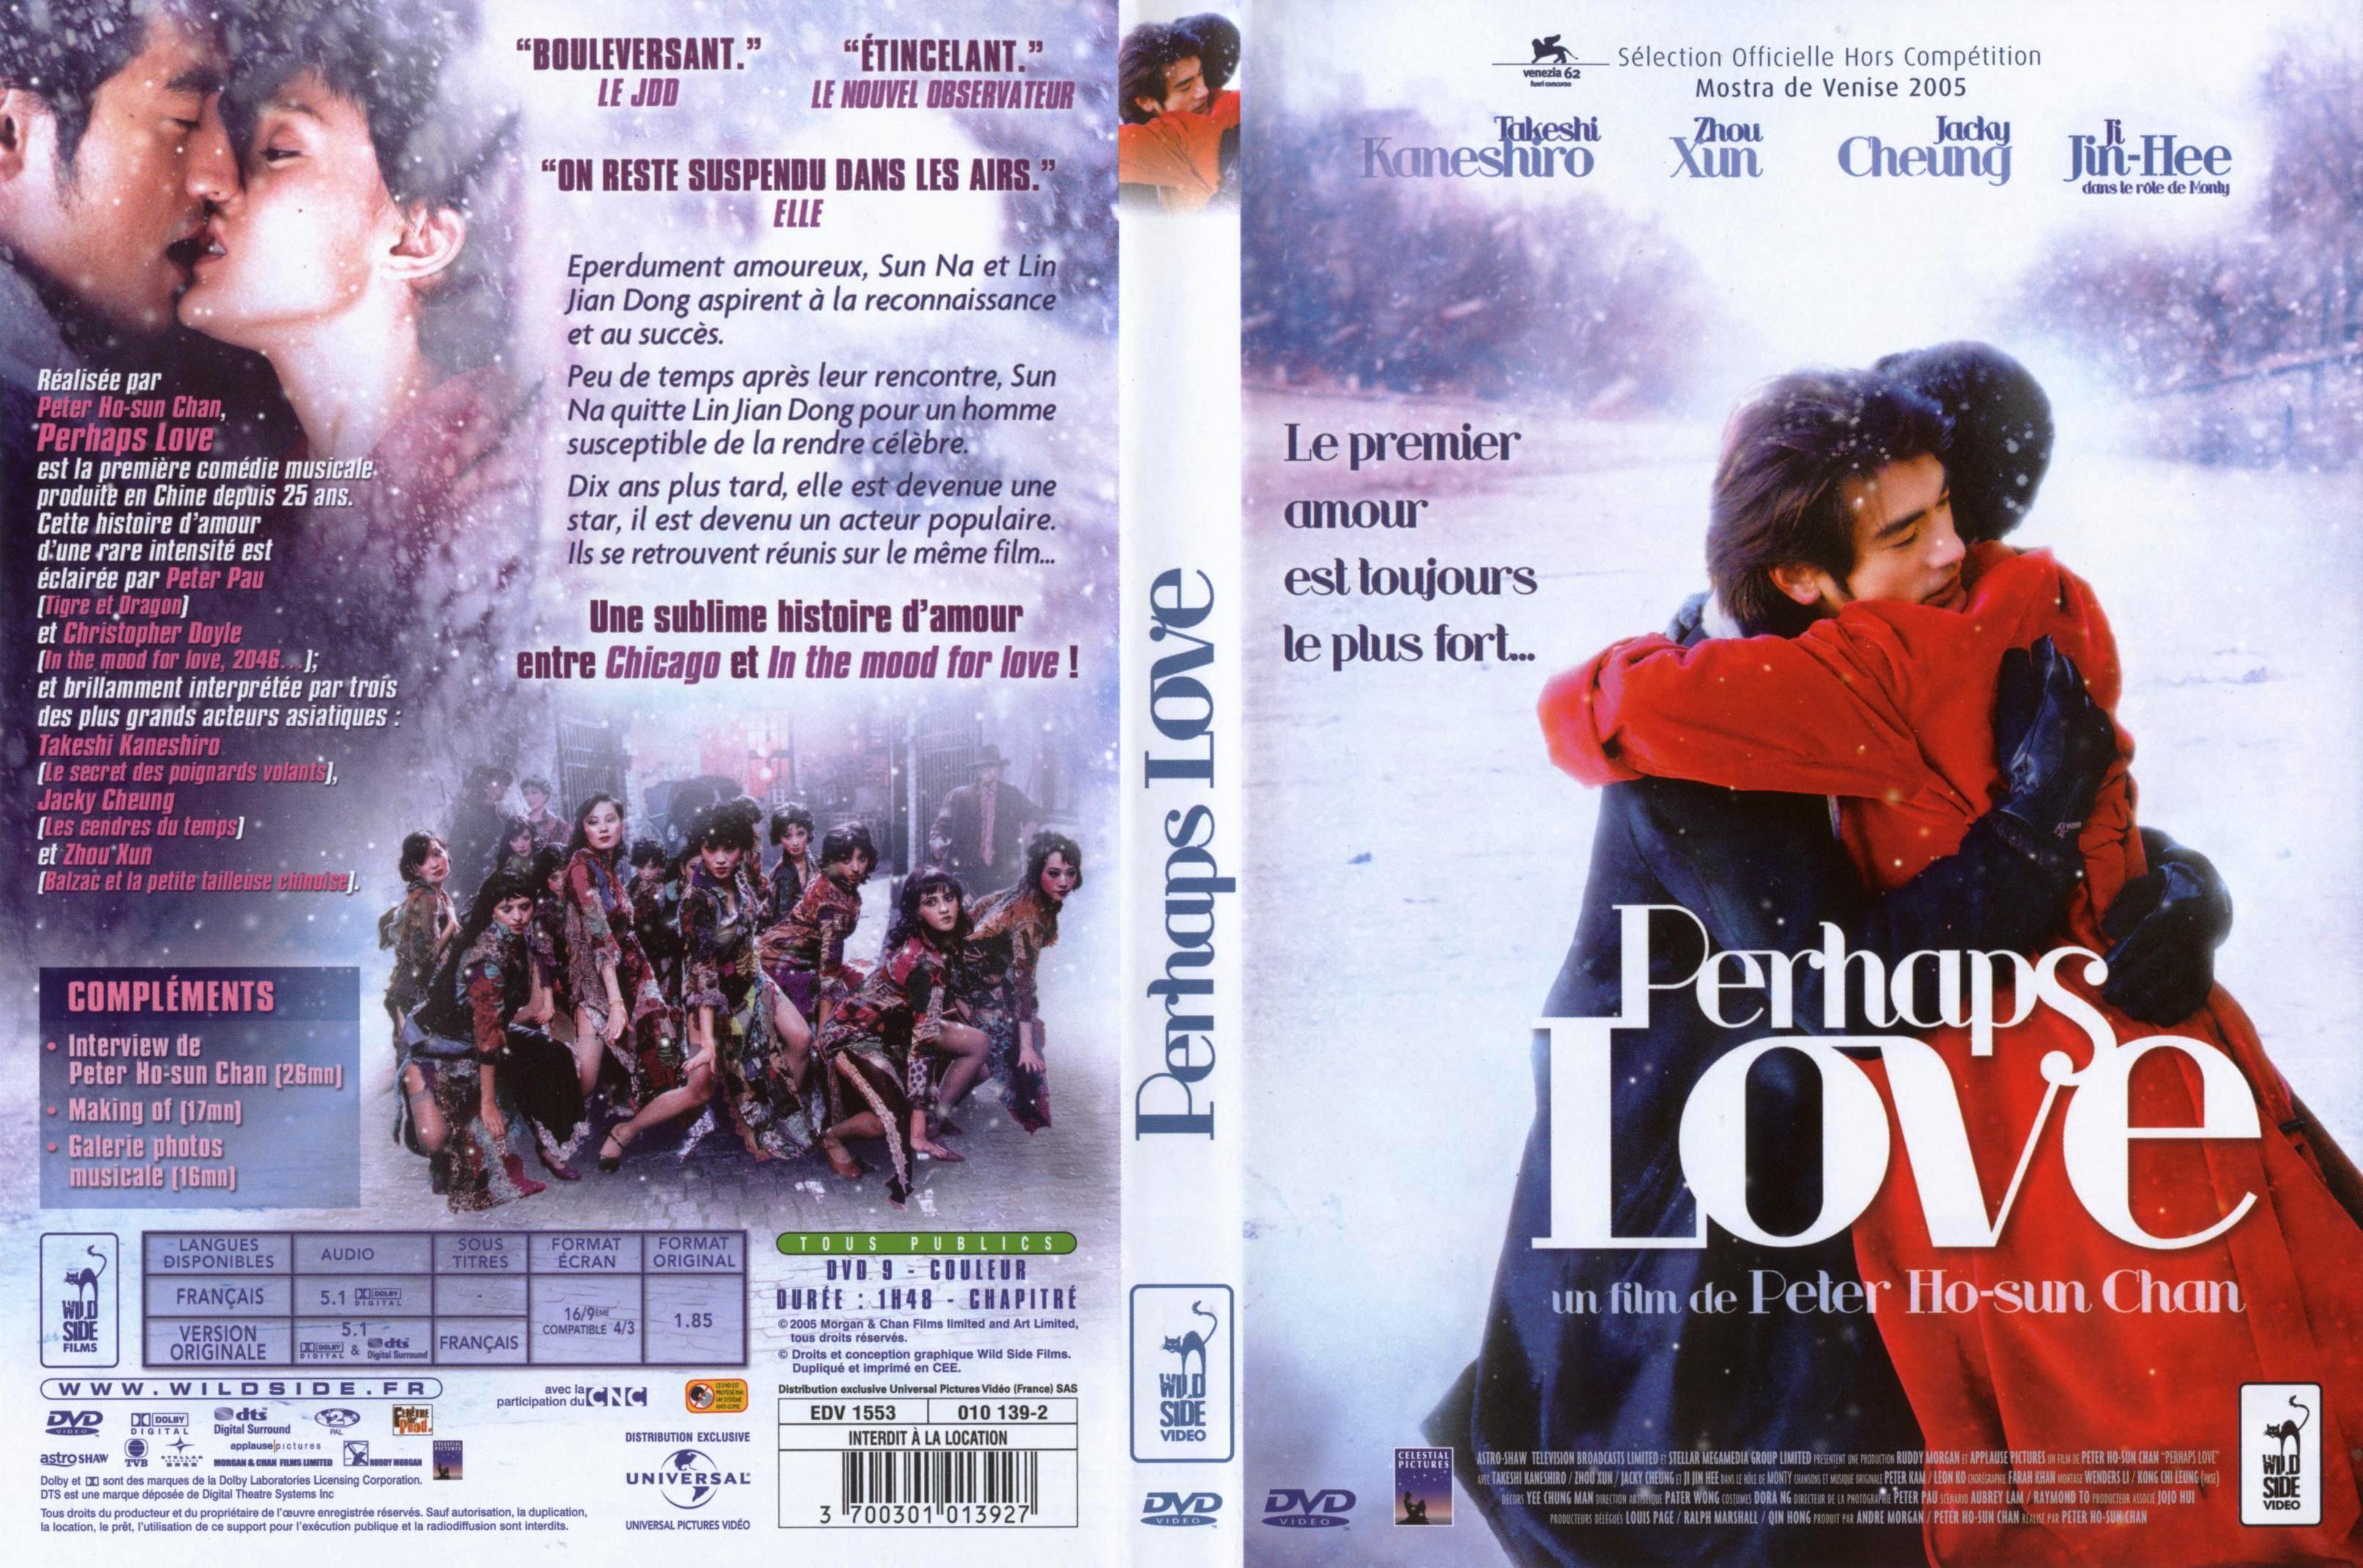 Jaquette DVD Perhaps love